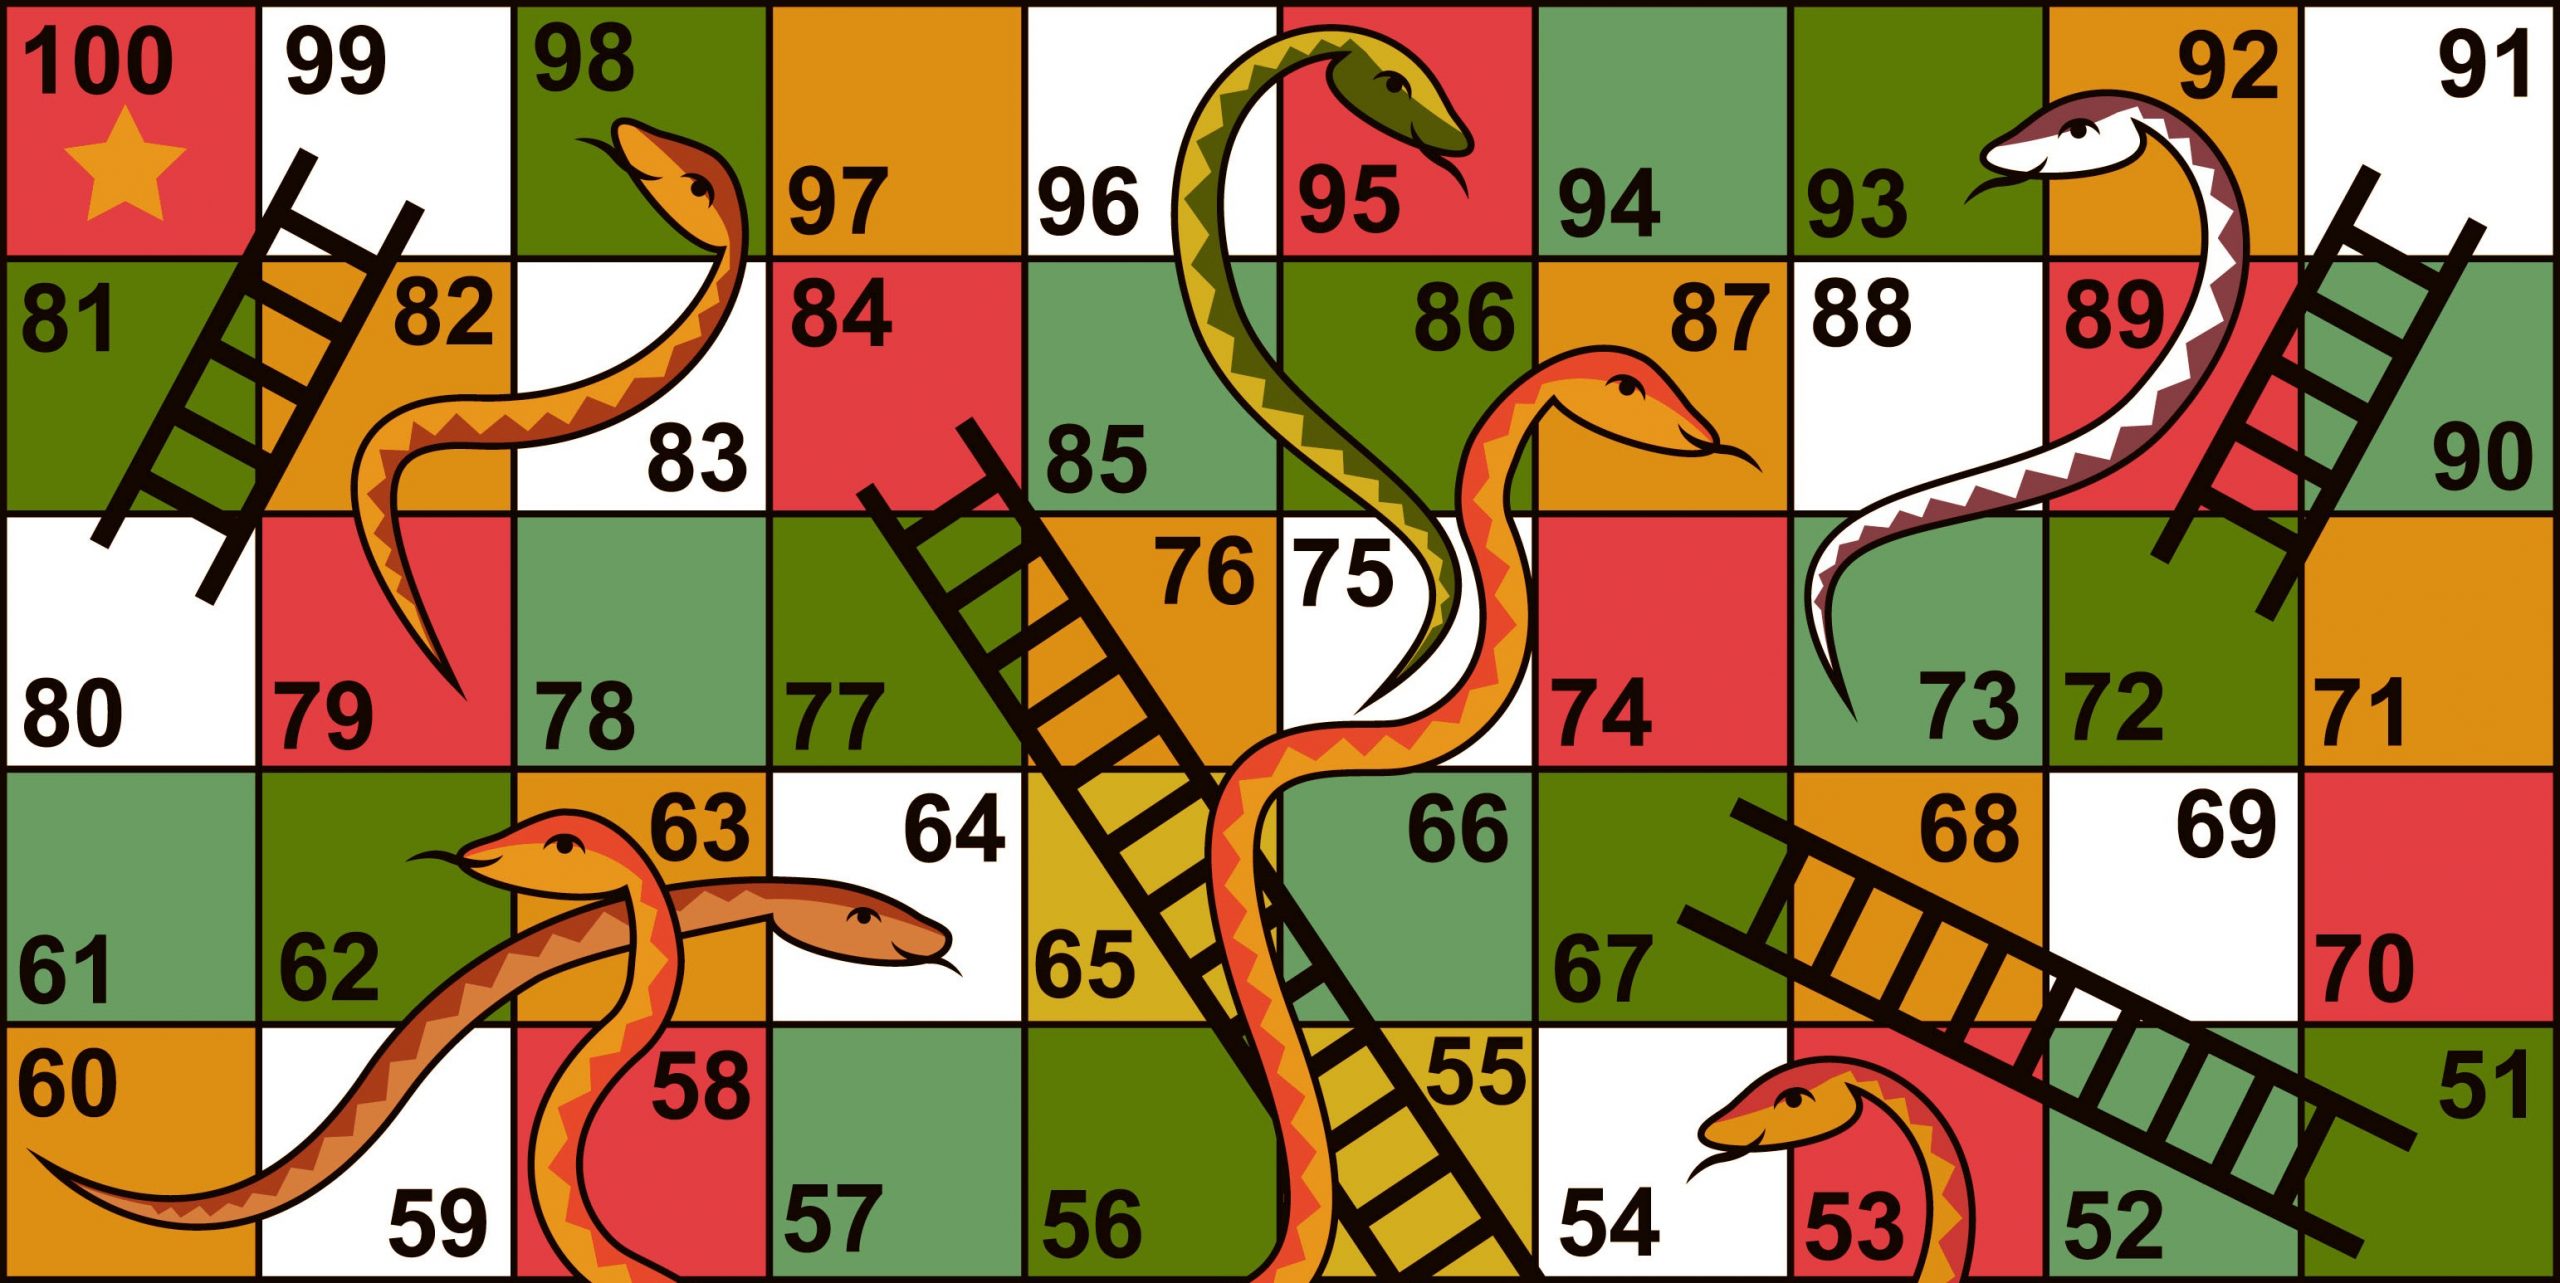 design-snake-and-ladder-game-ood-wisdom-overflow